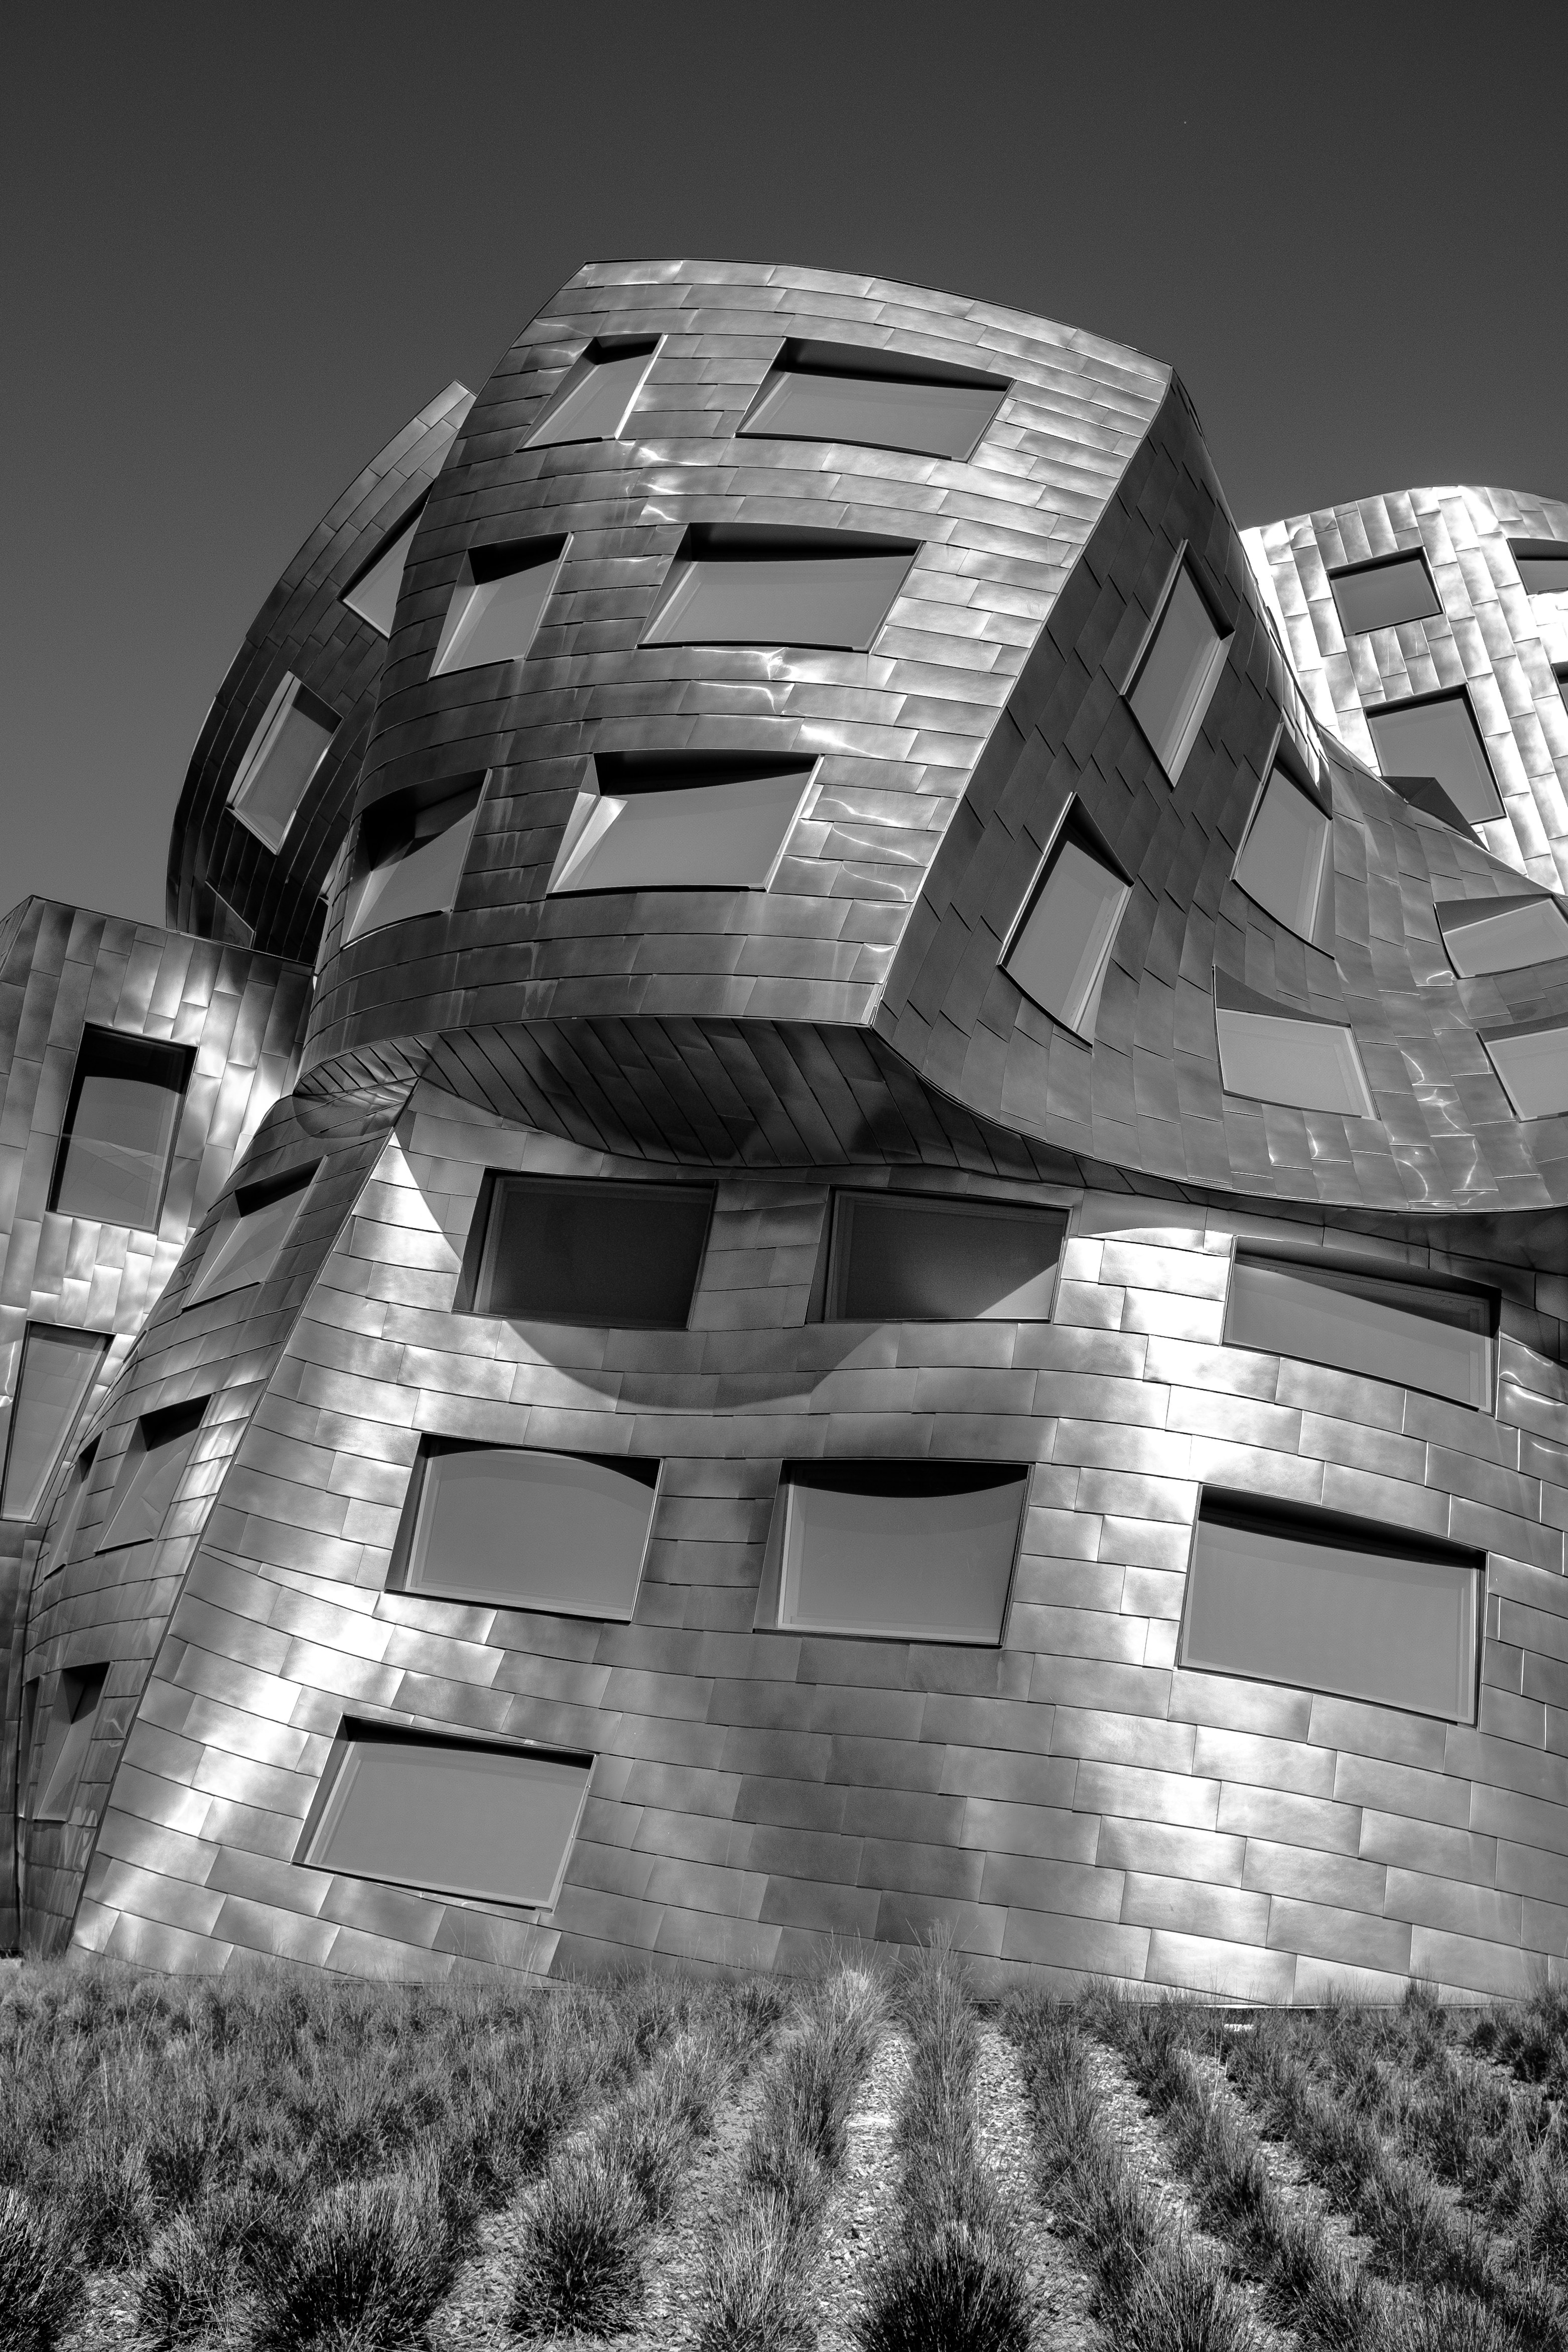 Amazing architecture of the Lou Ruvo Centre in Las Vegas, Nevada.